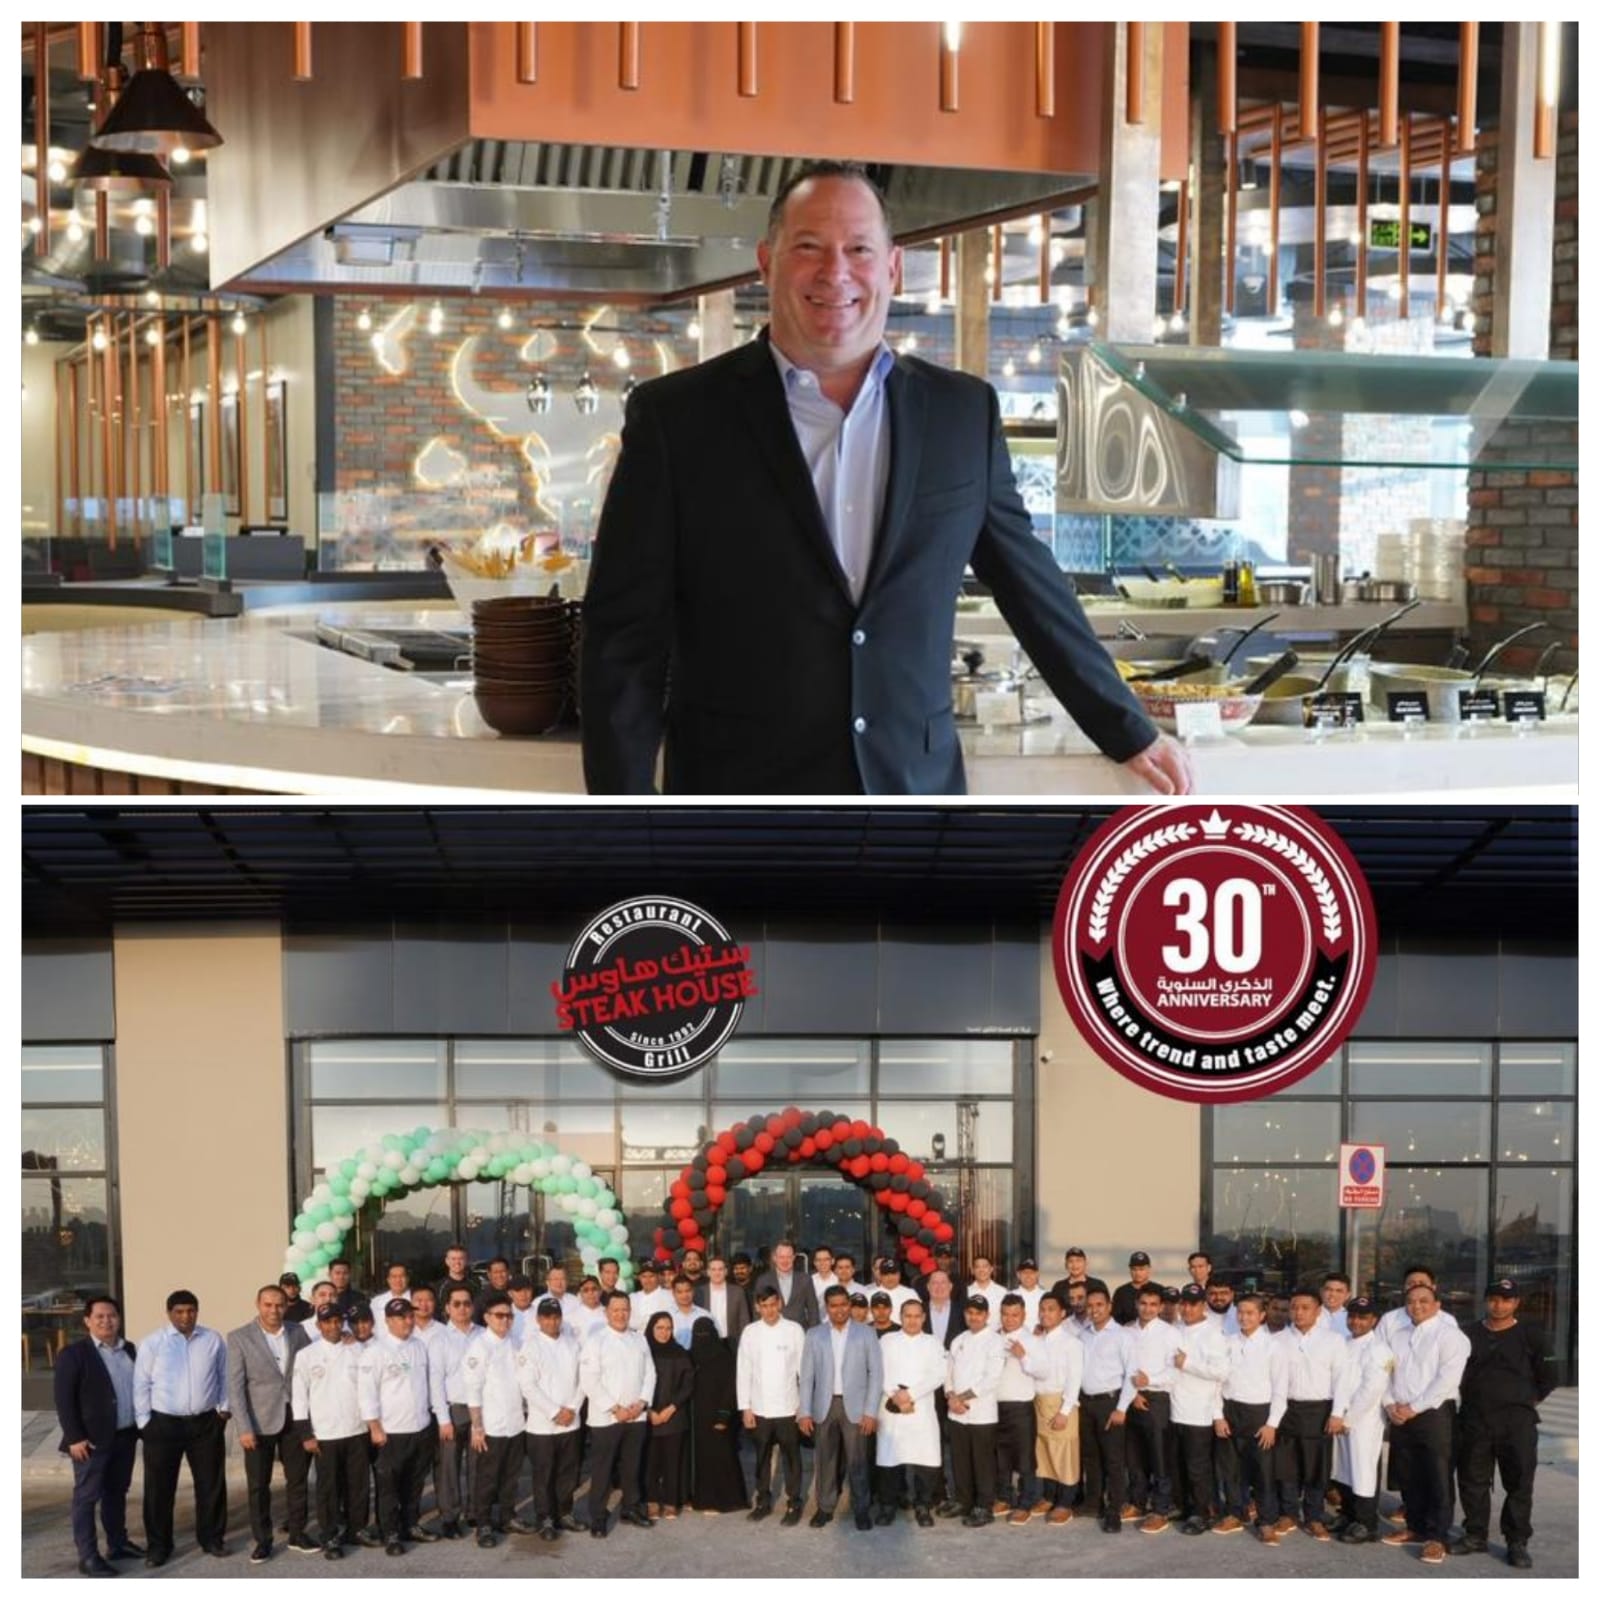 Steak House Marks 30th Anniversary